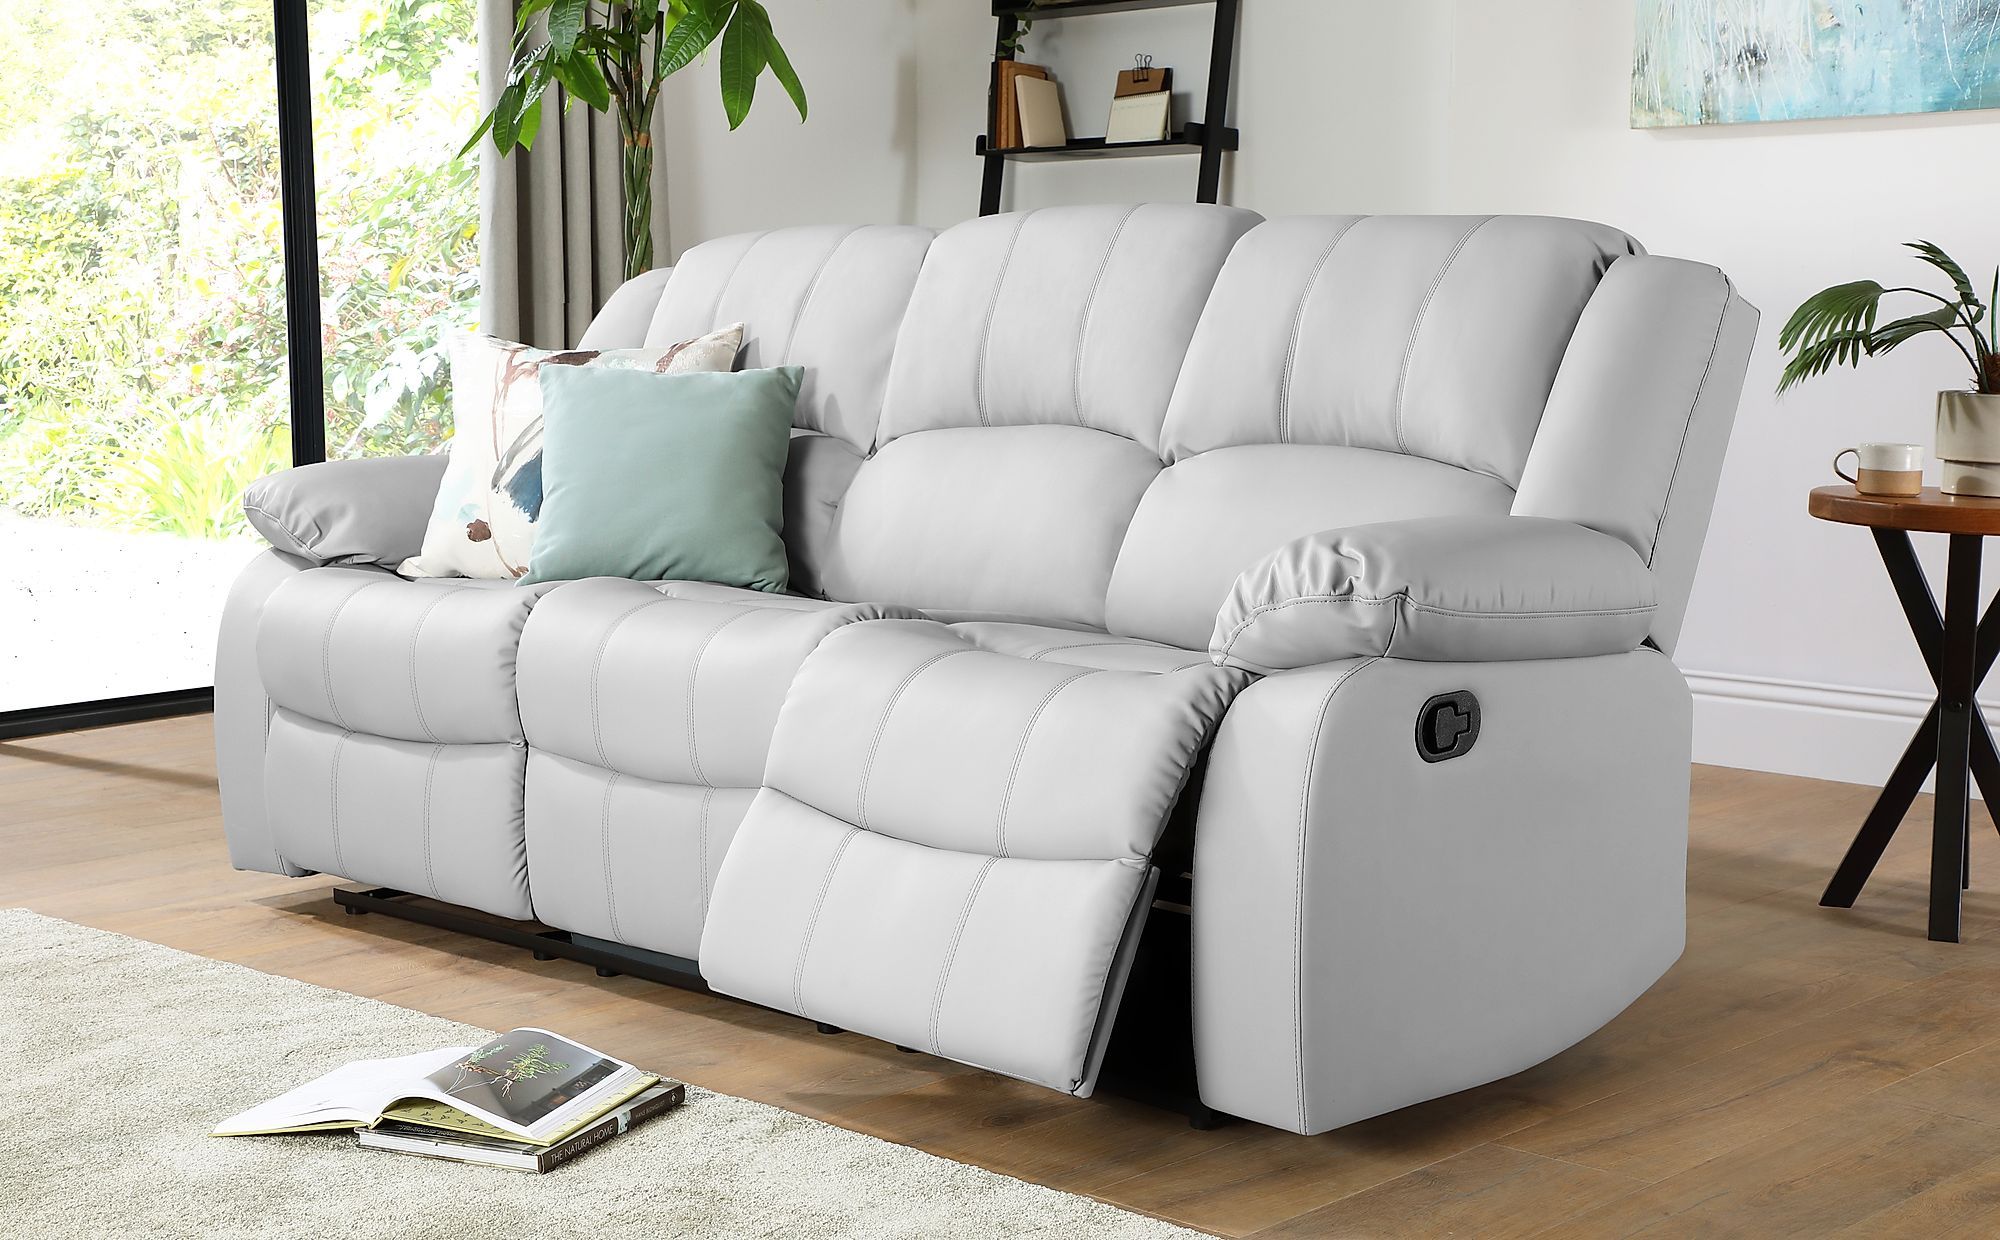 Dakota Light Grey Leather 3 Seater Recliner Sofa | Furniture Choice Inside Sofas In Light Grey (View 12 of 20)